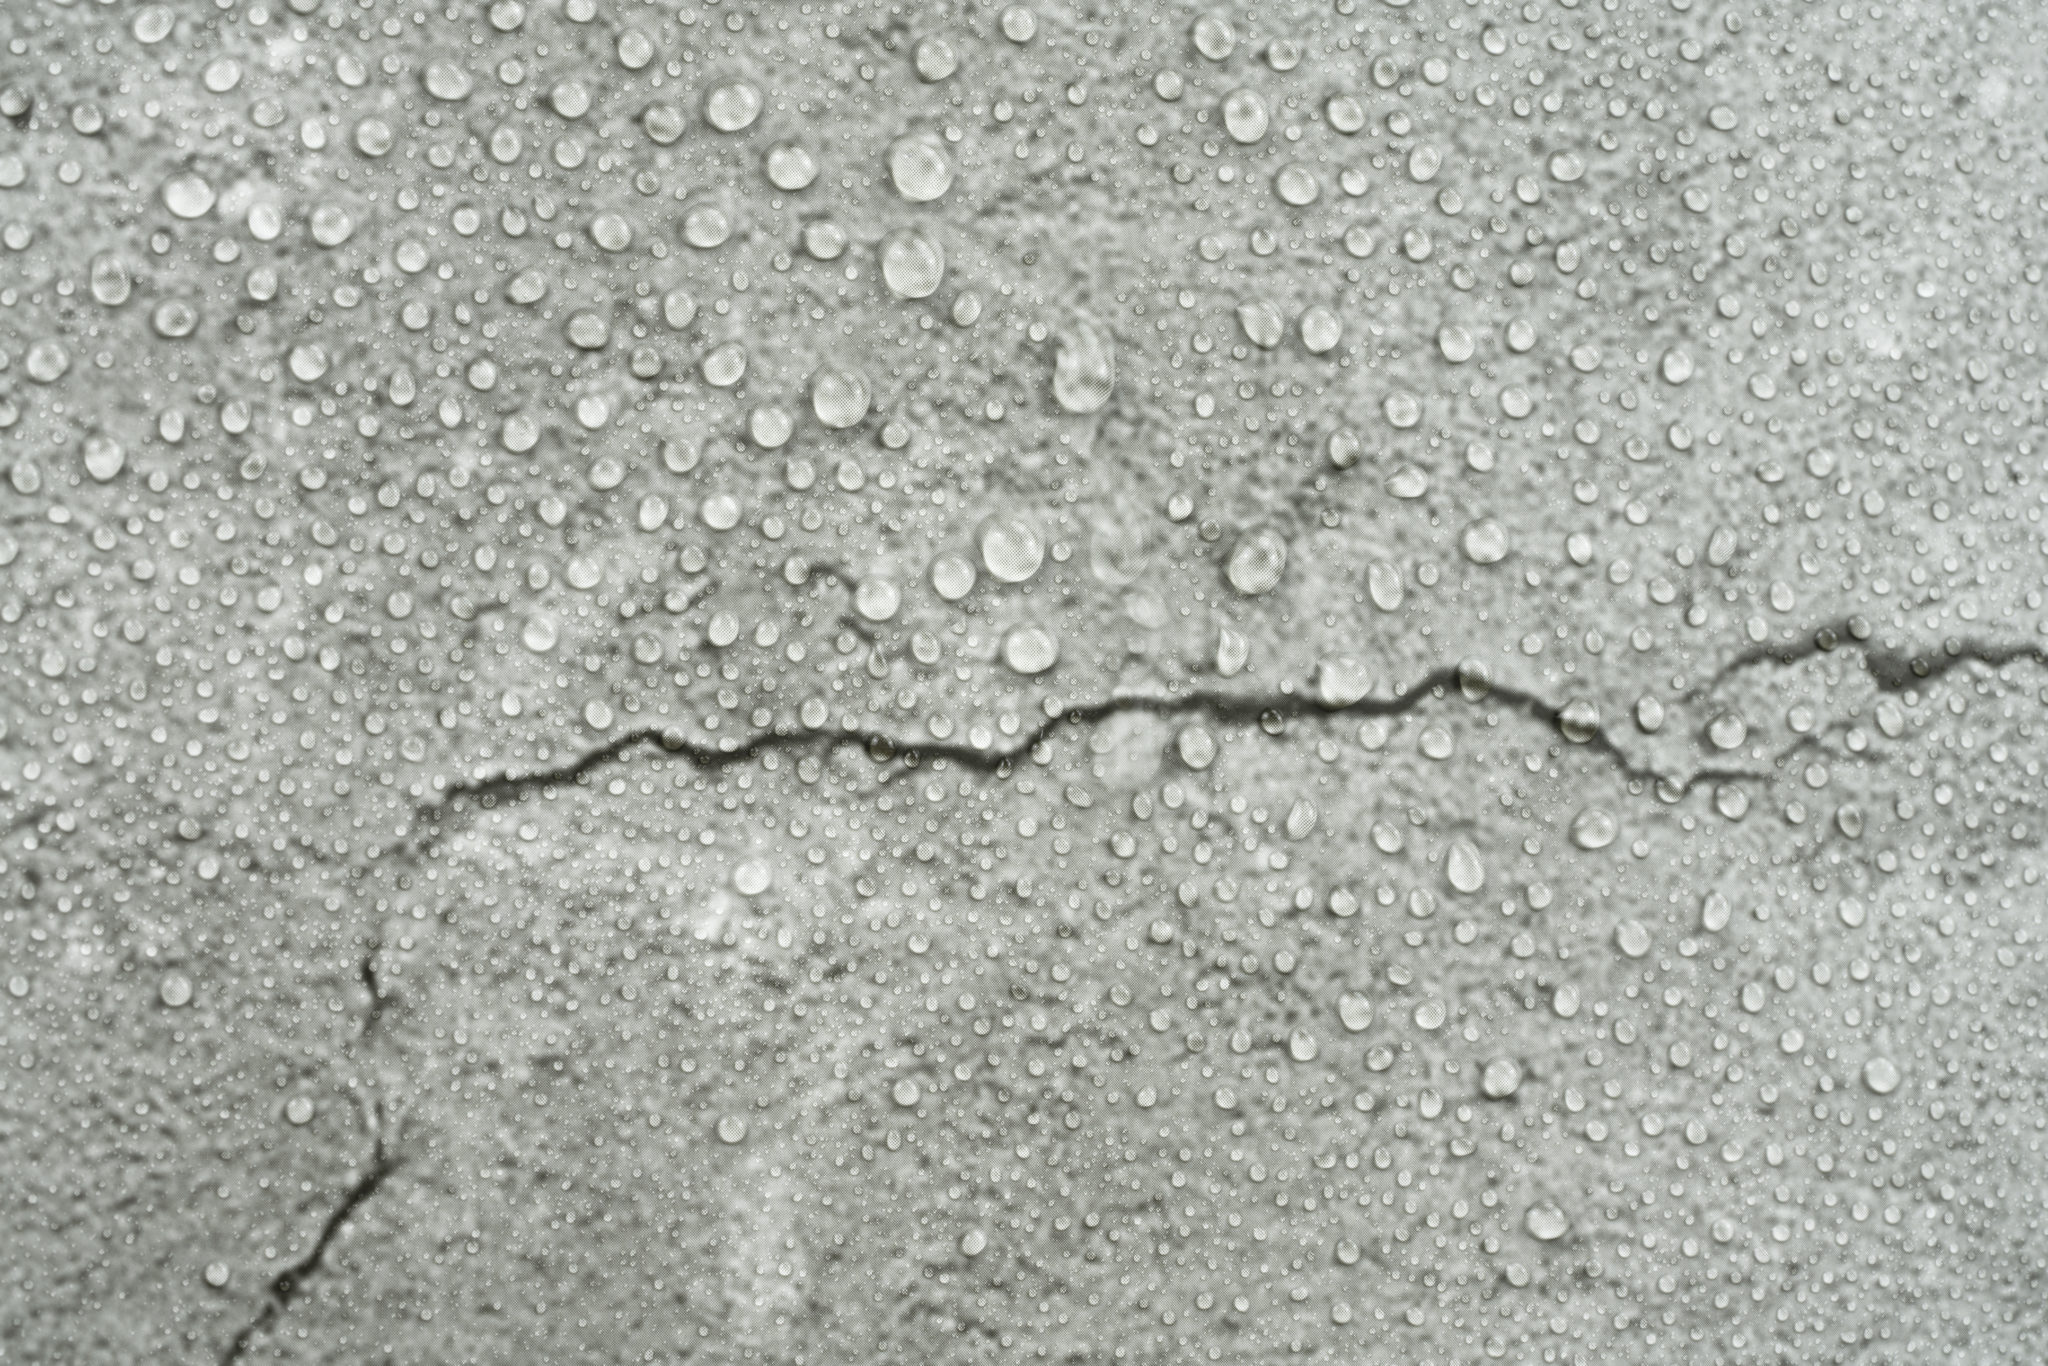 Crack in the concrete photo